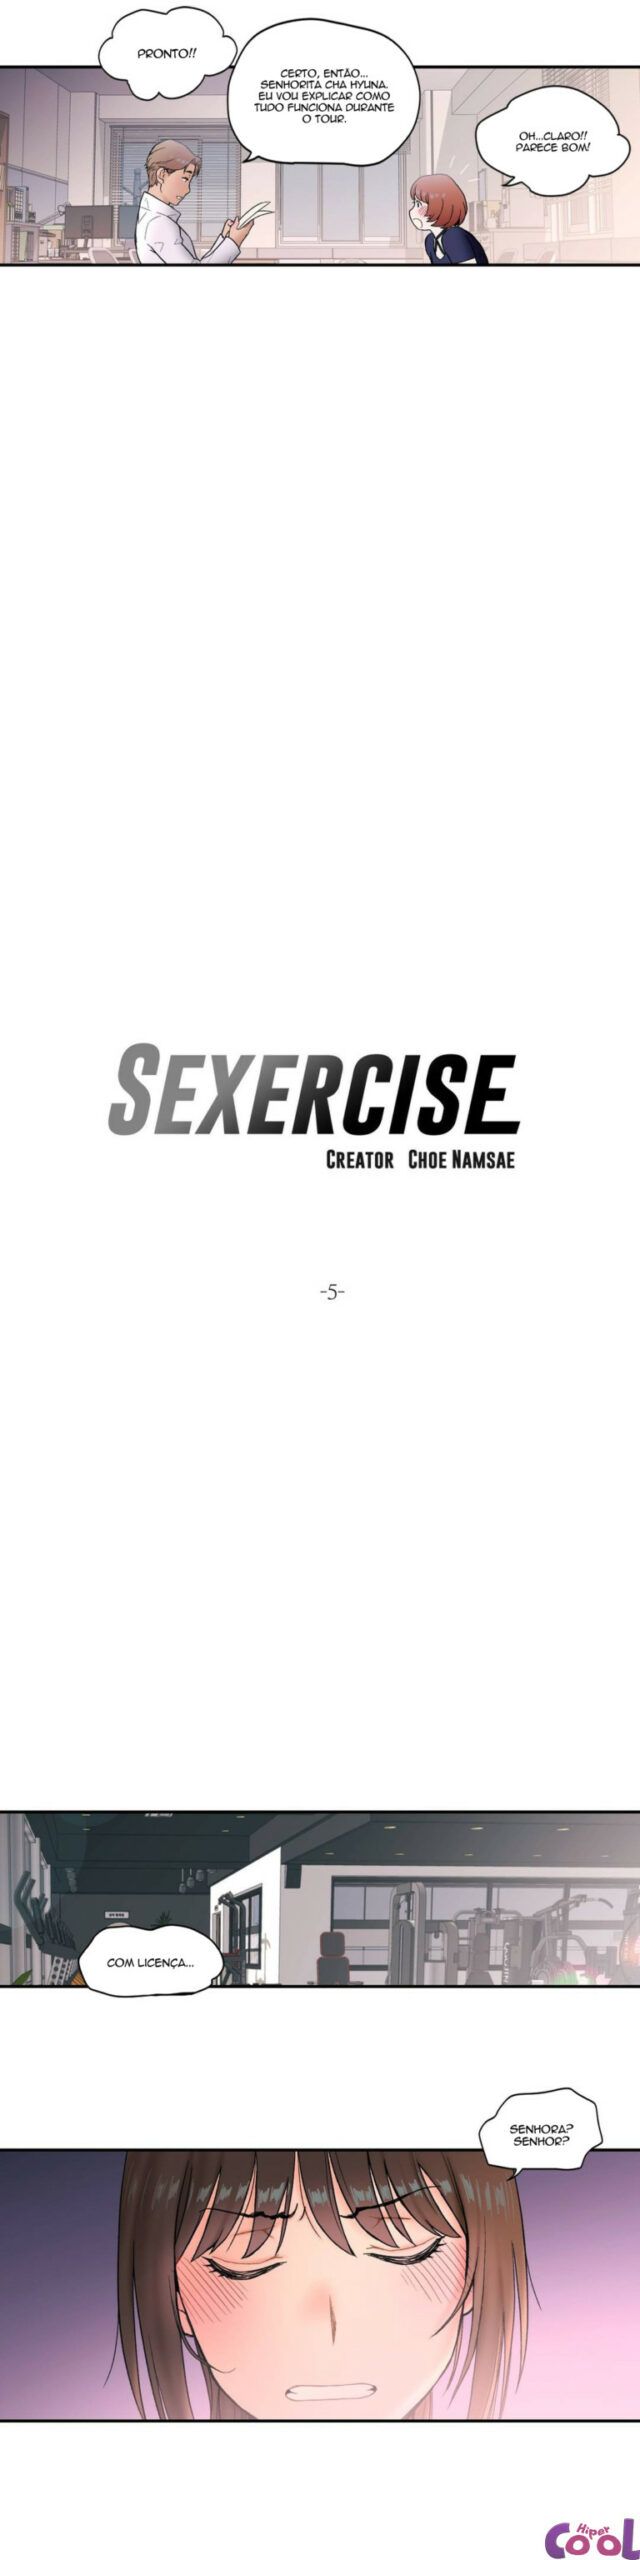 Sexercice 5